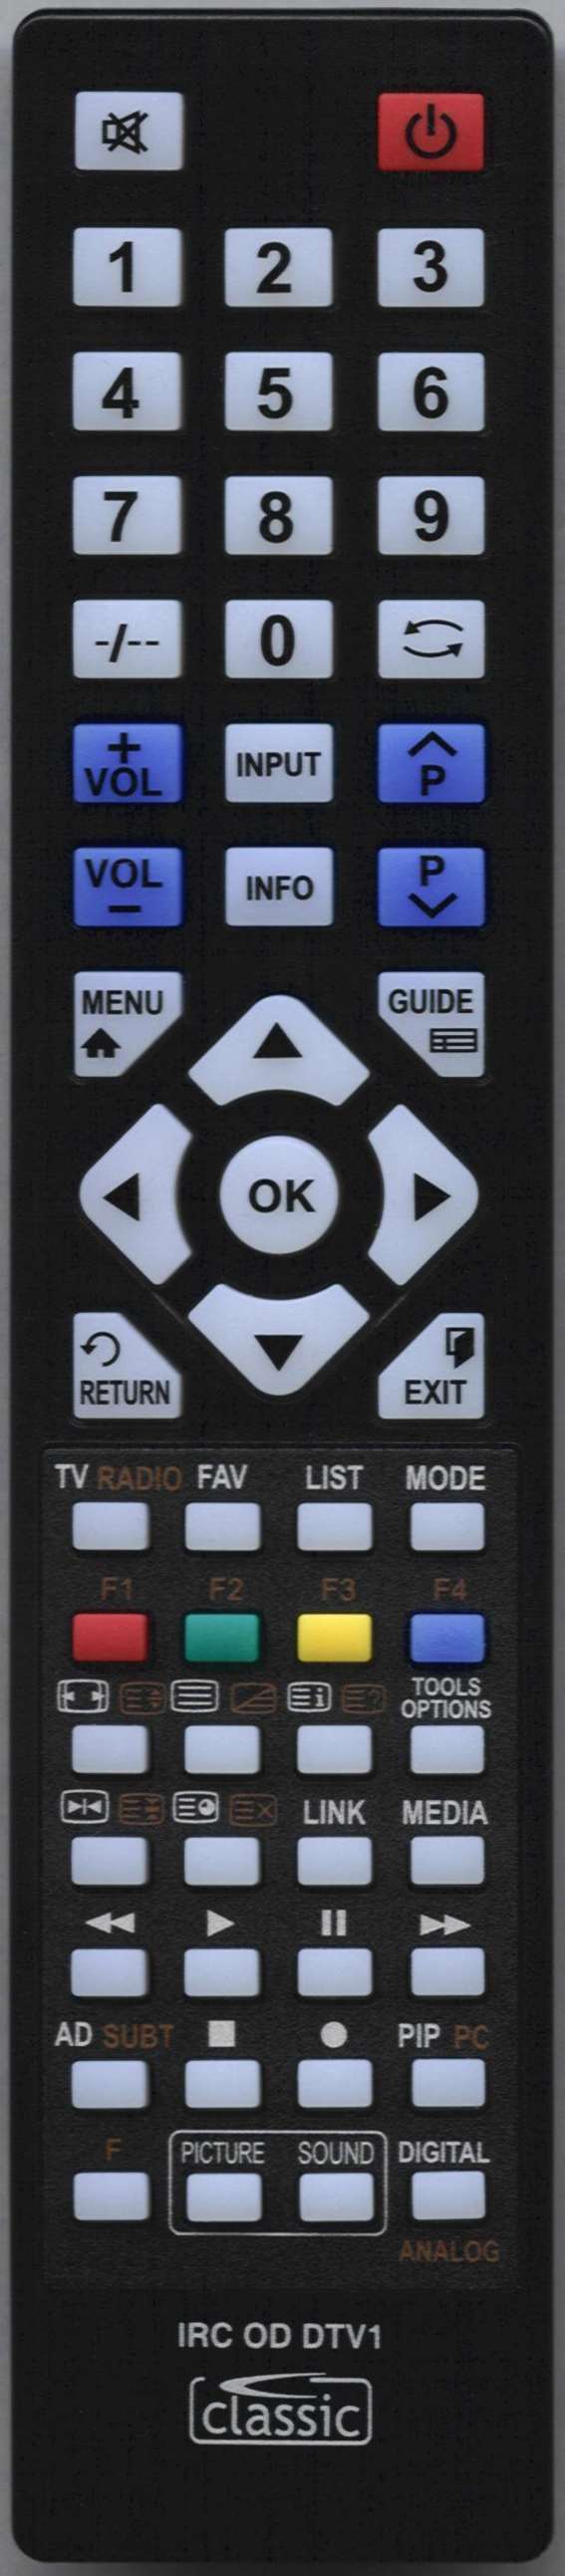 EMOTION X26/29E-GB-TCDUP4-UK Remote Control Alternative